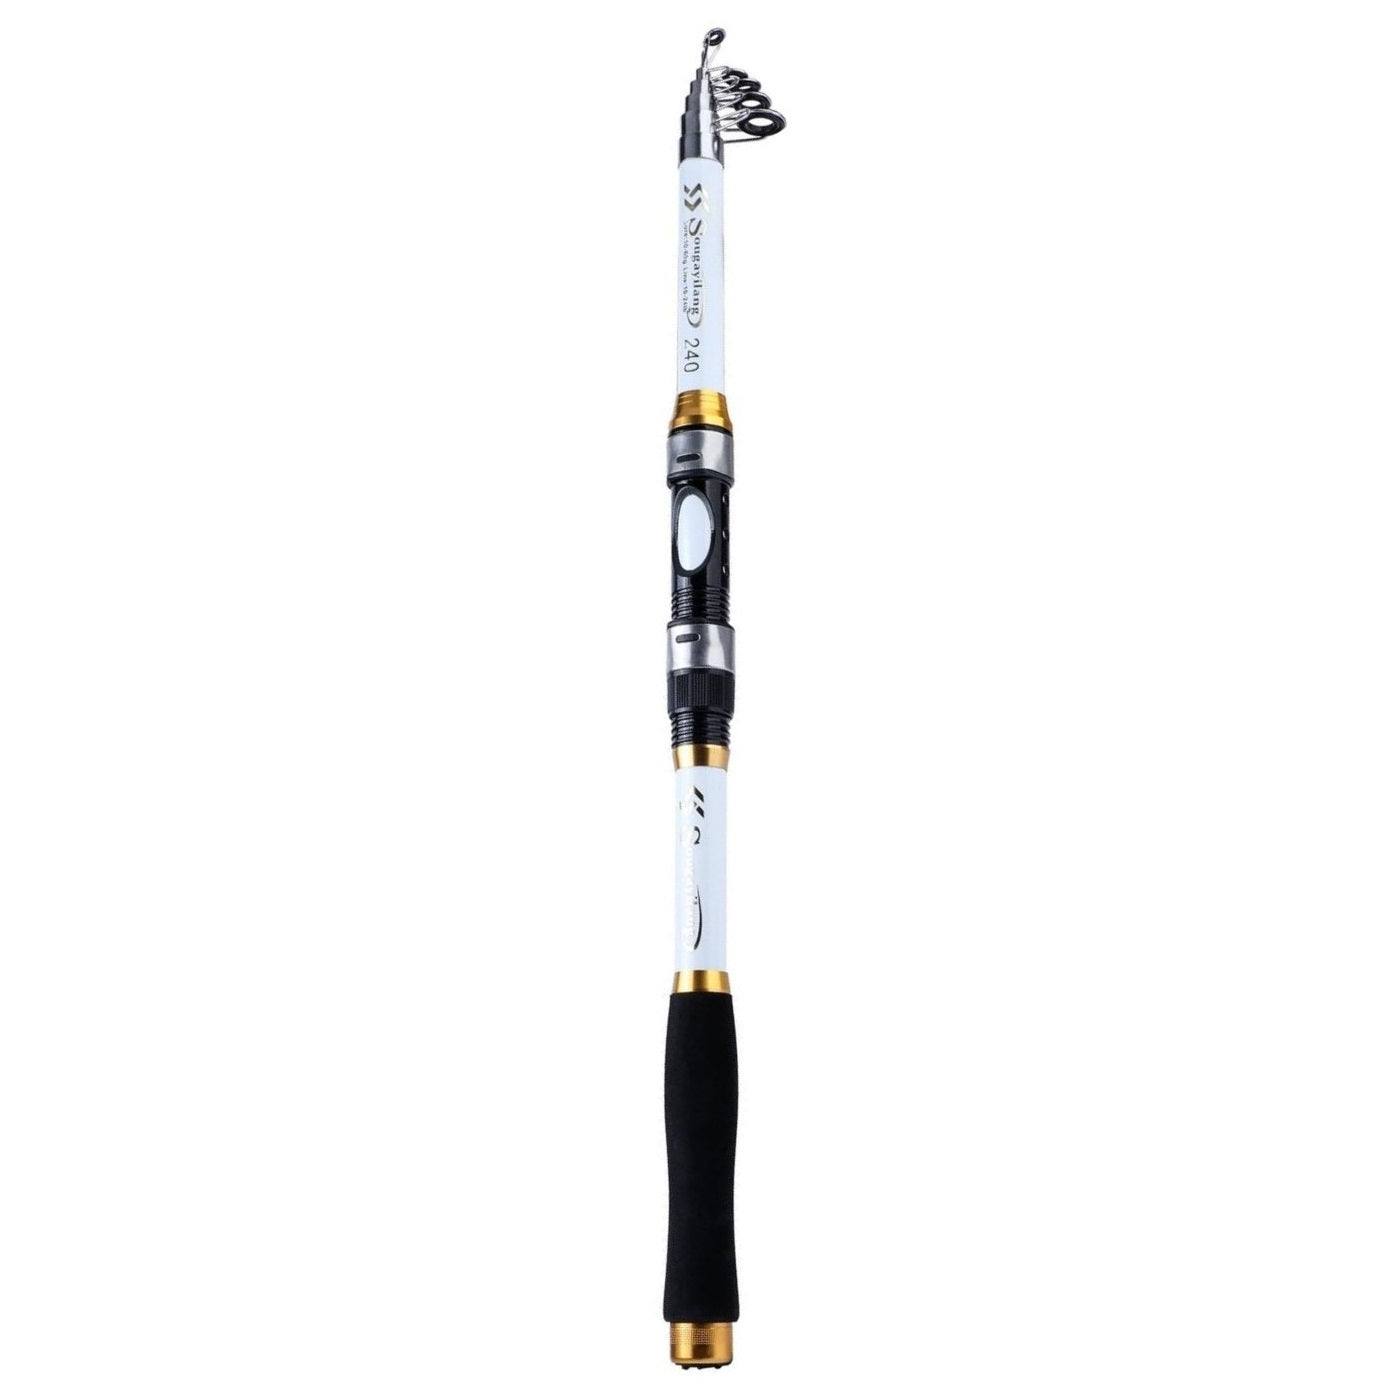 1.8-3.3-meter Carp Fishing Rod Cost-effective FRP Material Fishing Pole Maximum Load: 8kg Telescopic Fishing Rod